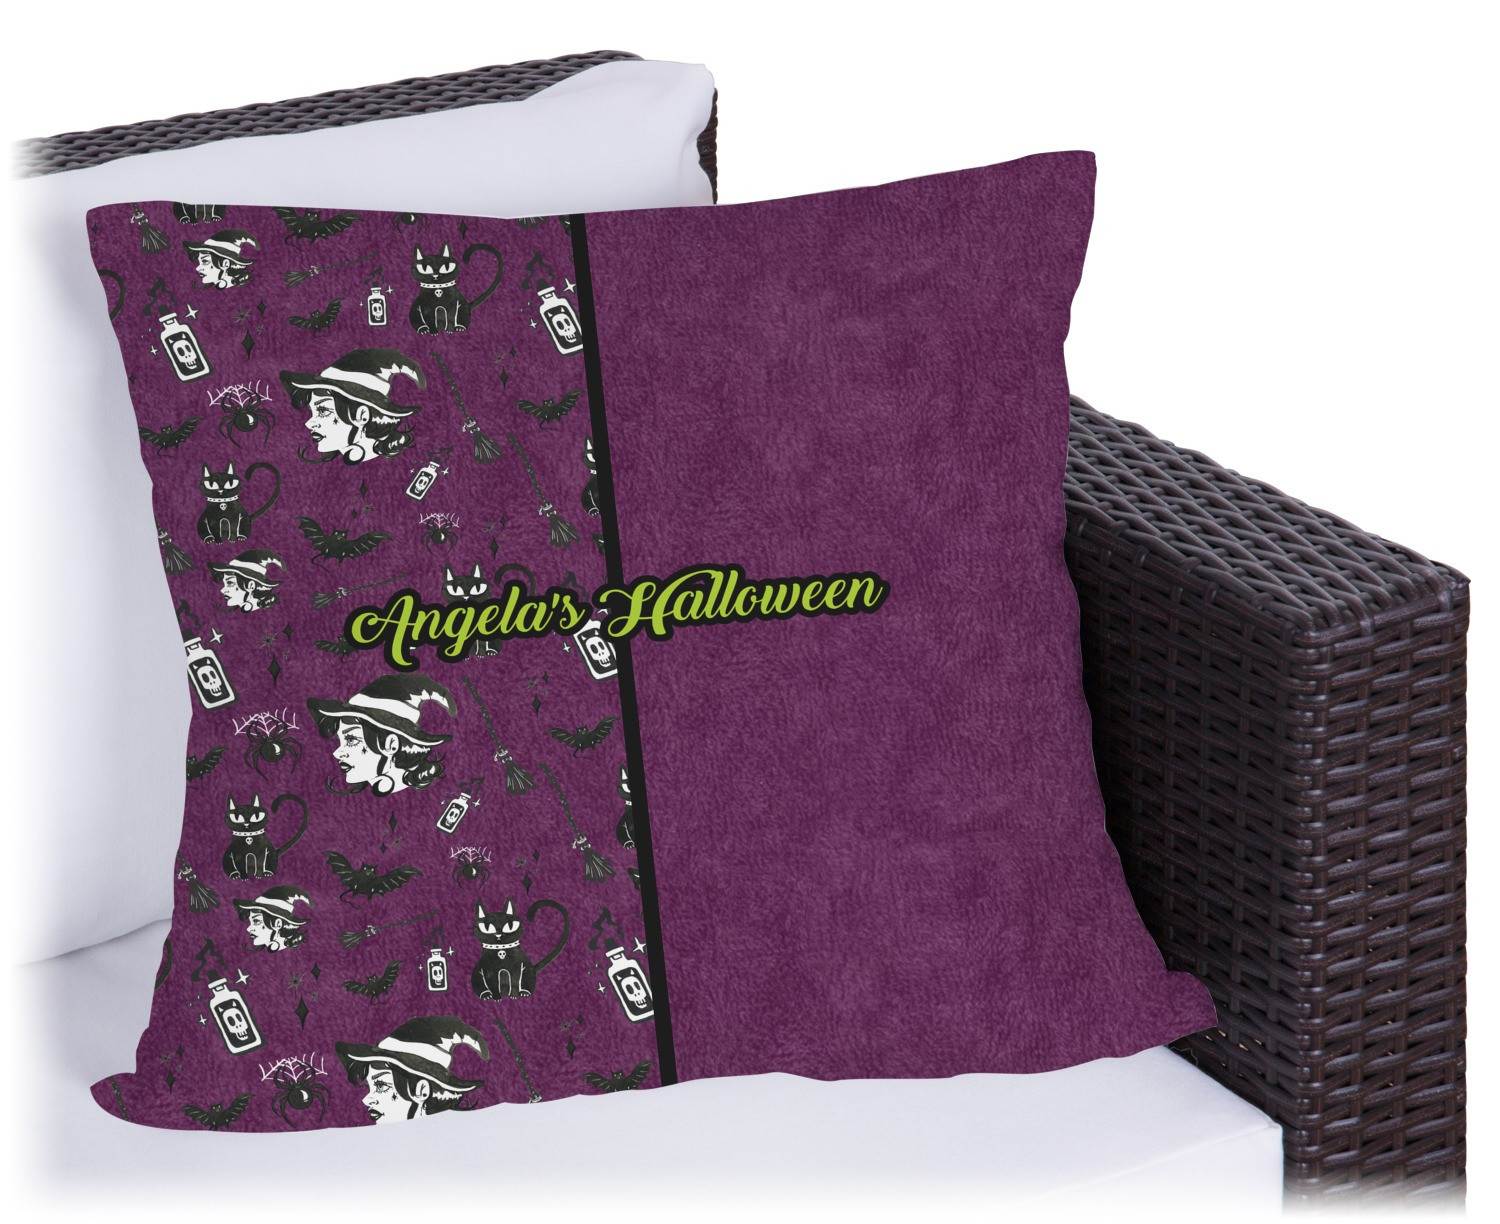 Outdoor Halloween Pillows
 30 the Best Ideas for Outdoor Halloween Pillows Home